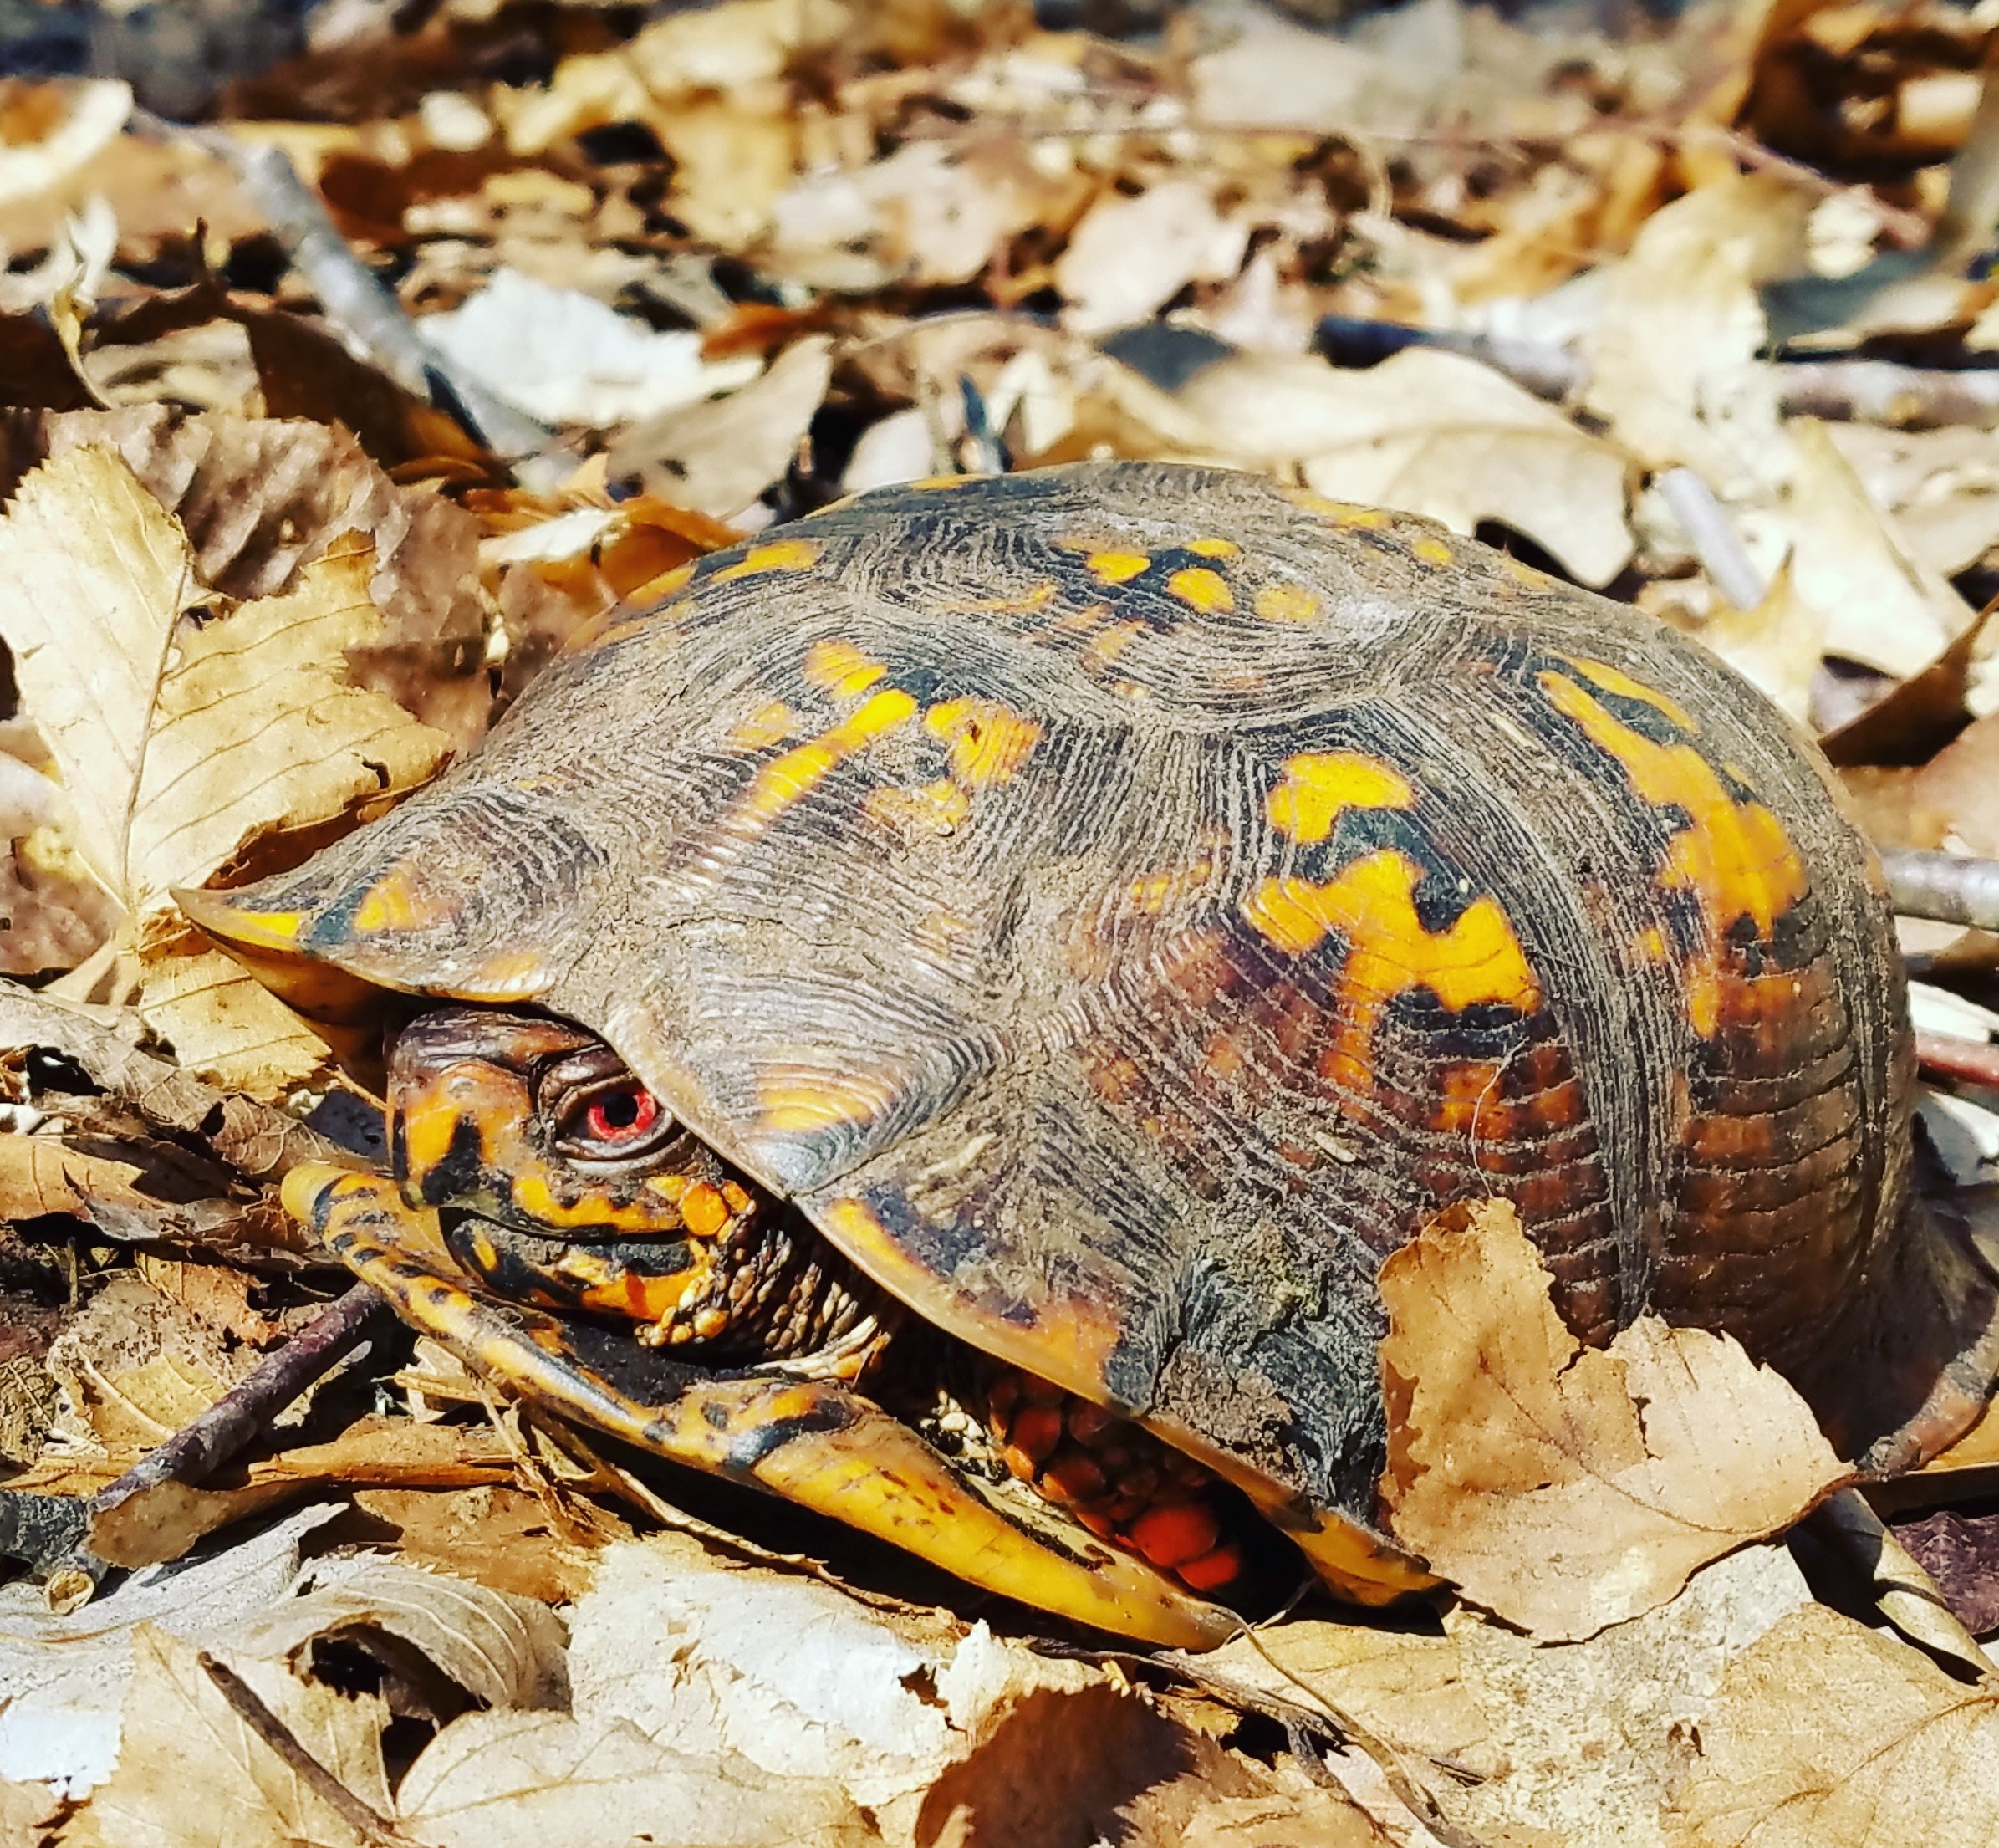 Box Turtle at Hop Brook Preserve, a Metacomet Land Trust property in Blackstone, MA. 